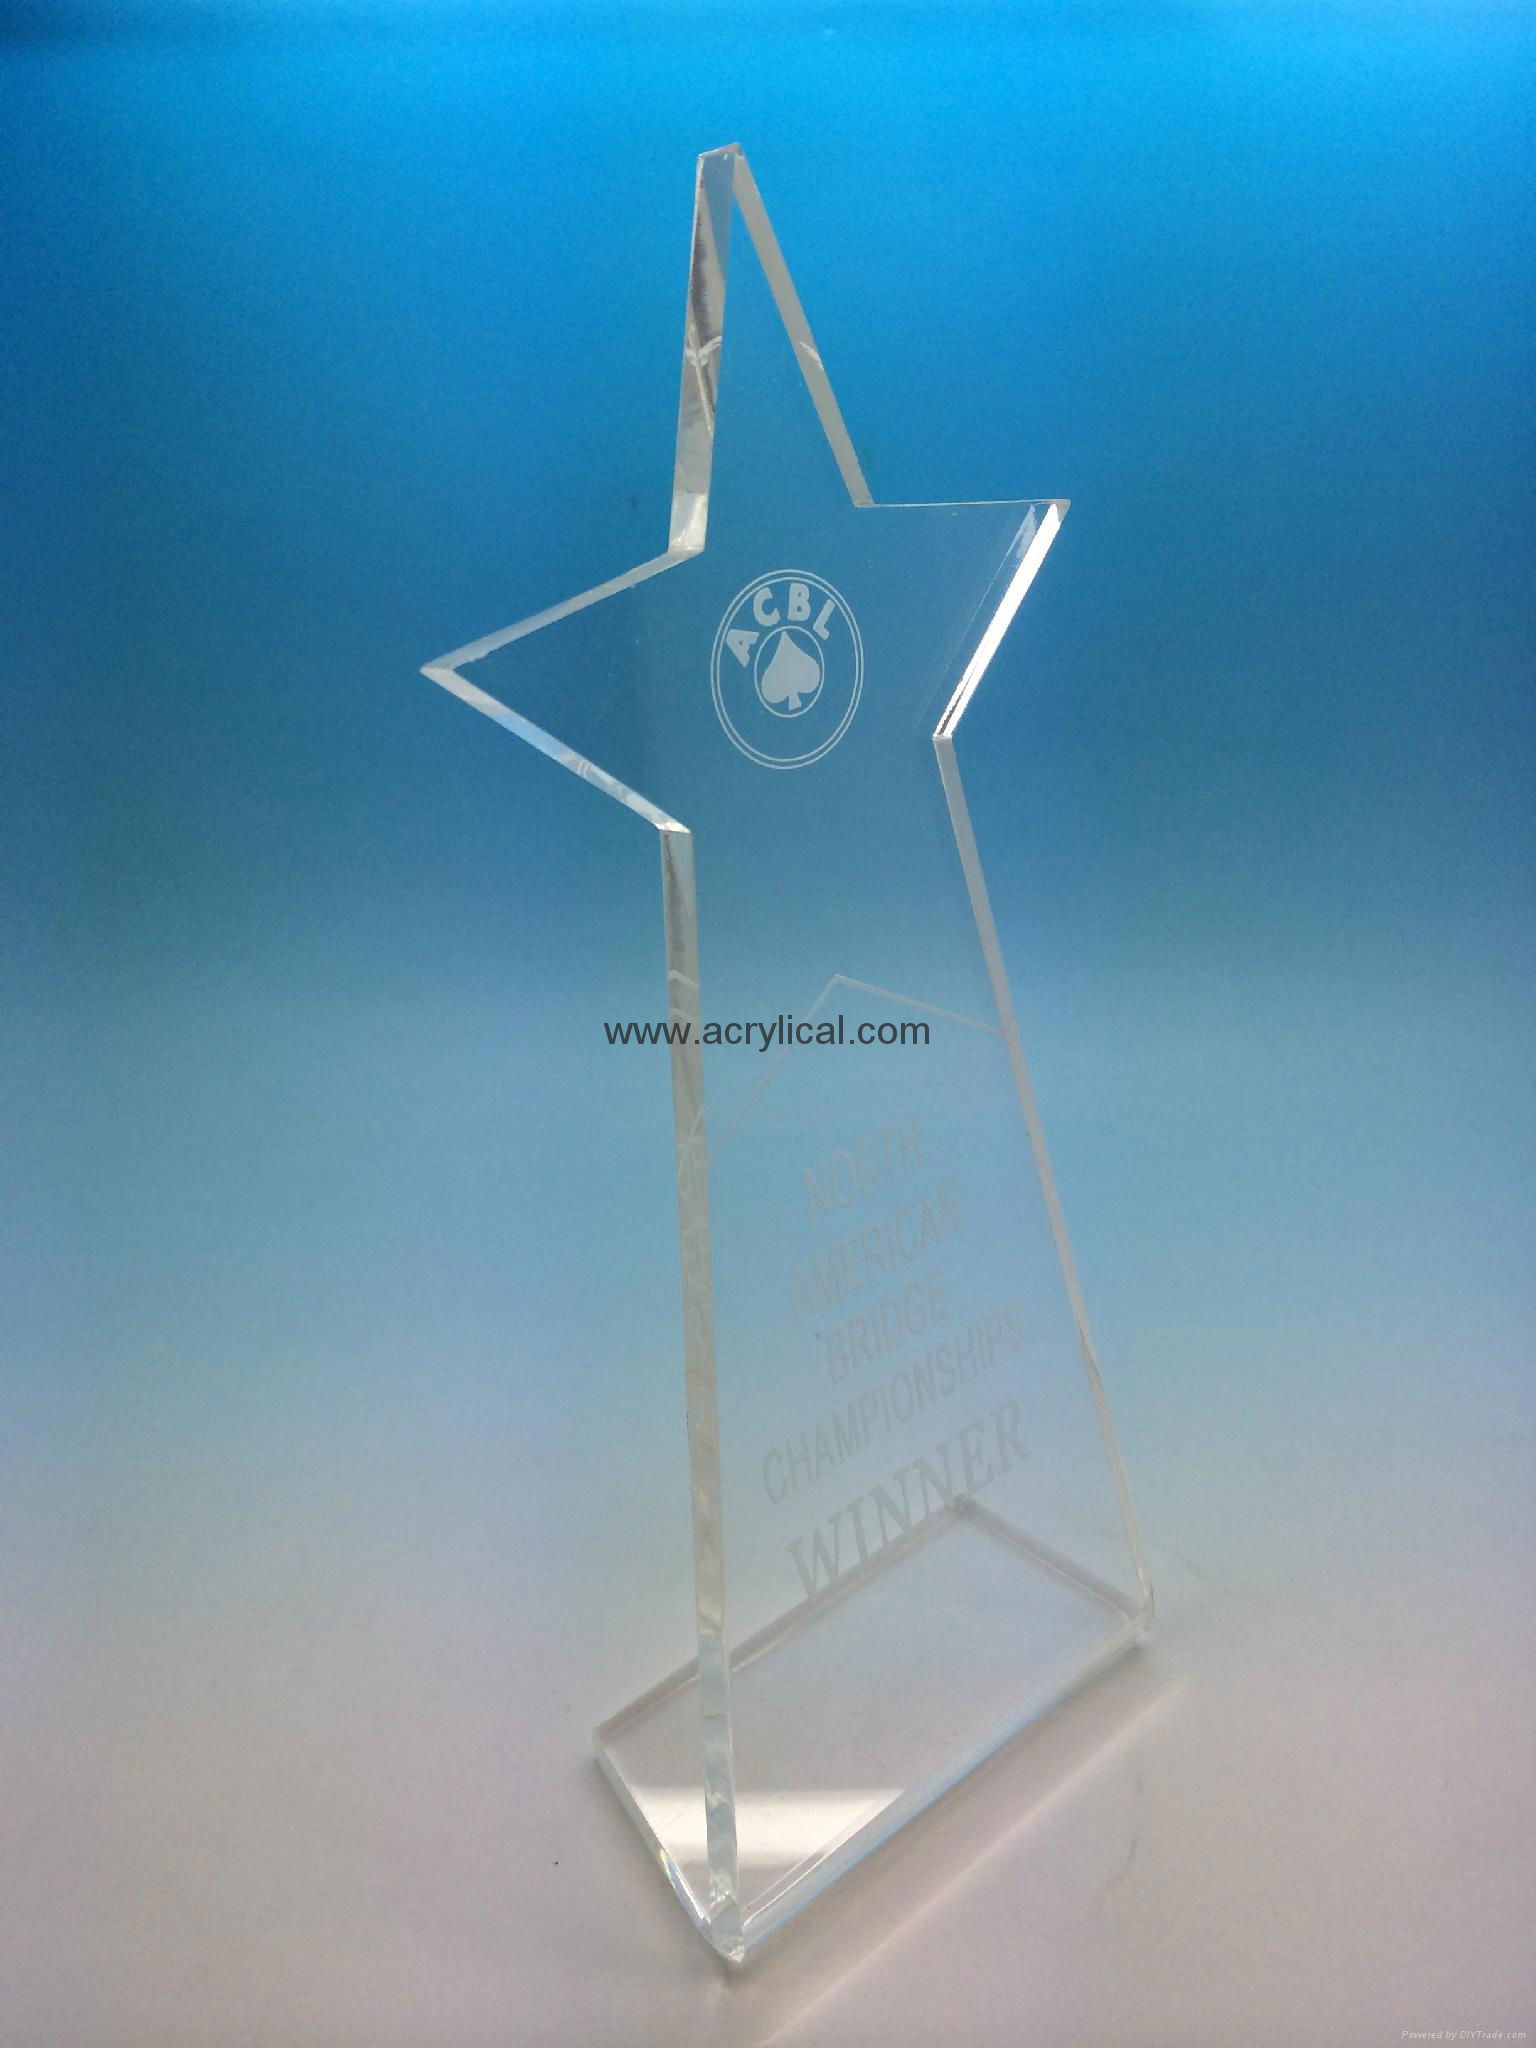 acrylic  award-logo engraving,Acrylic Award, Recognition Plaques,Corporate Awad